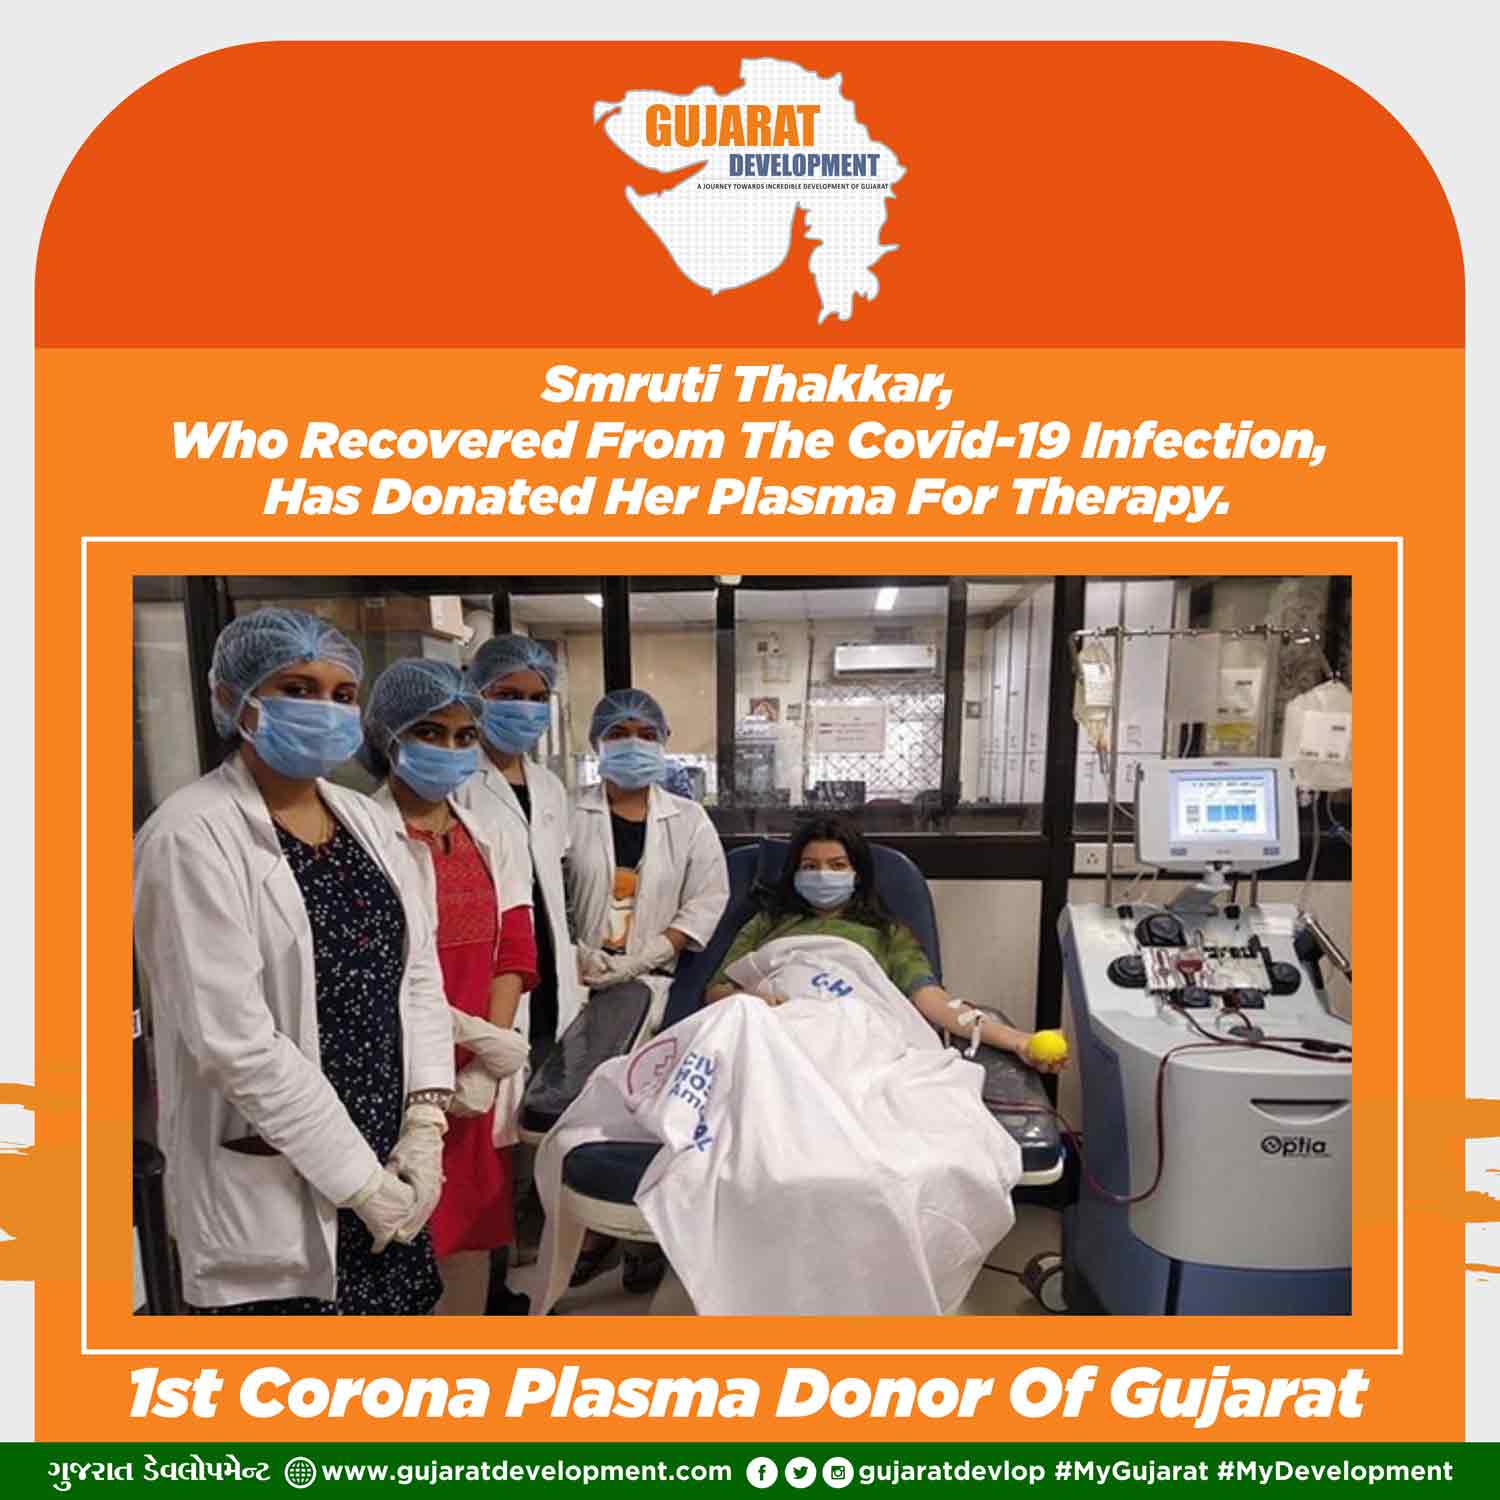 Smruti Thakkar 1St Plasma Donor Of Gujarat